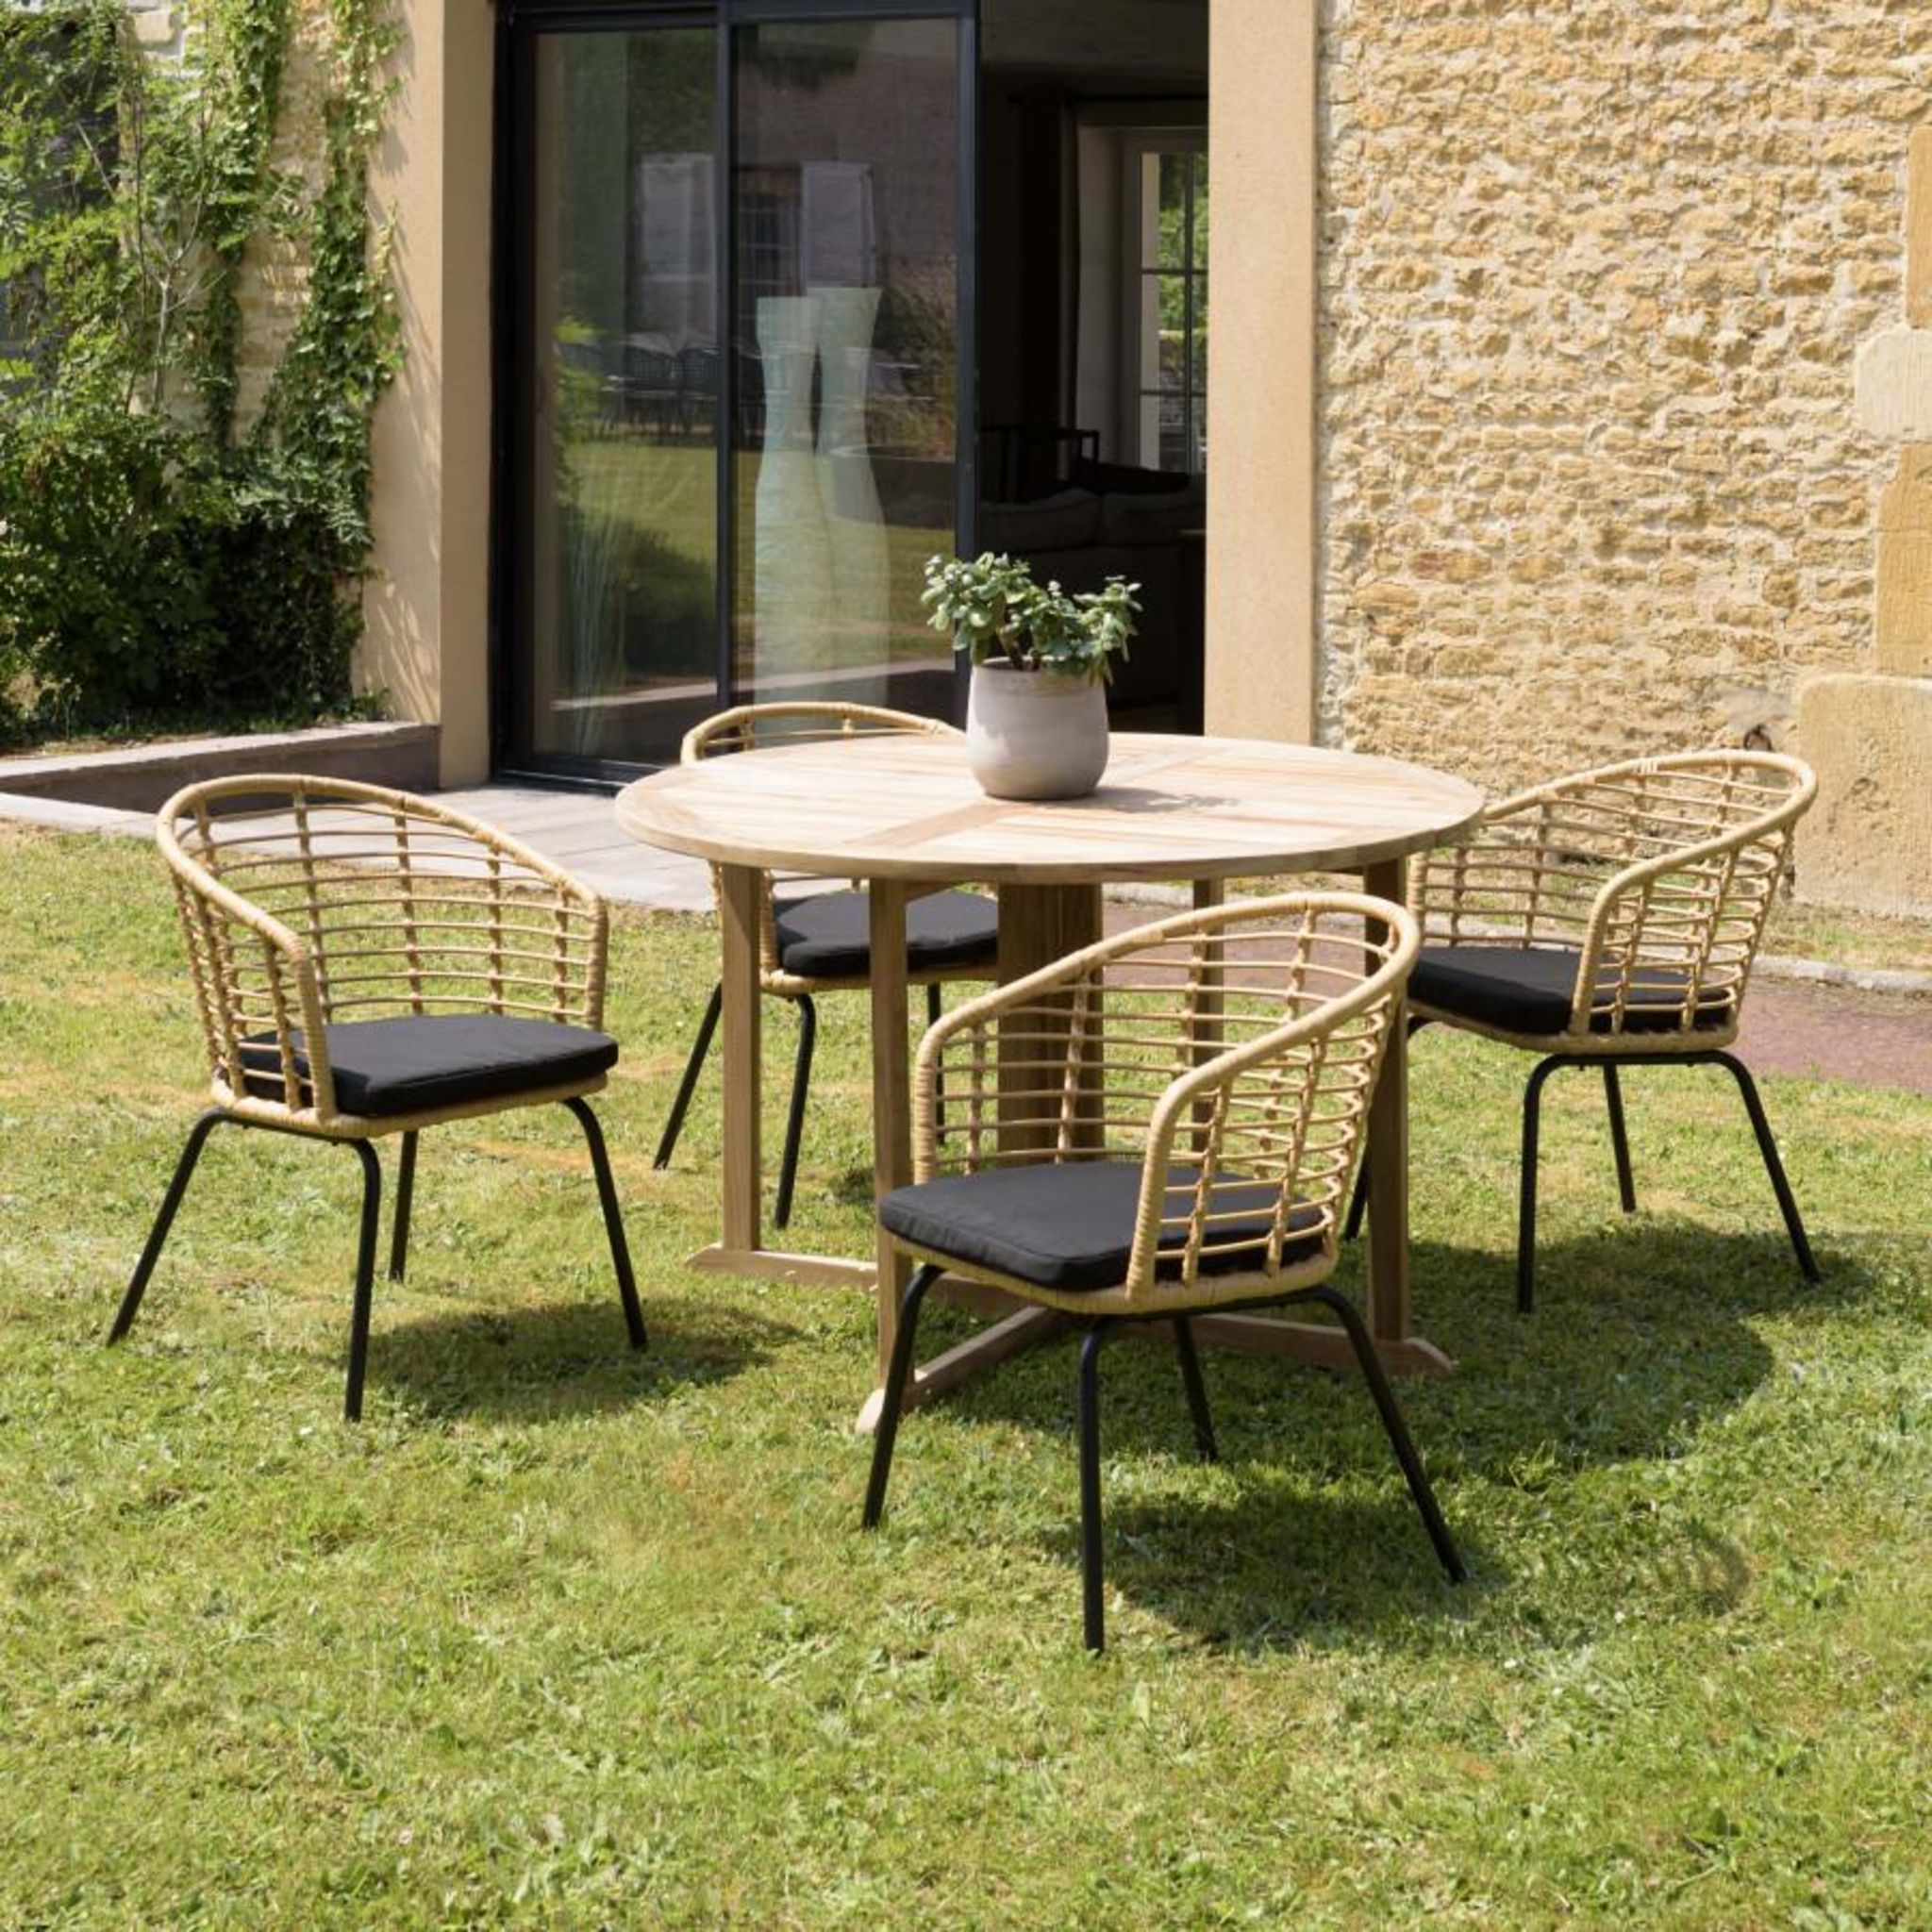 Salon de jardin 1 table teck 180x100 cm - 6 fauteuils cordage noir